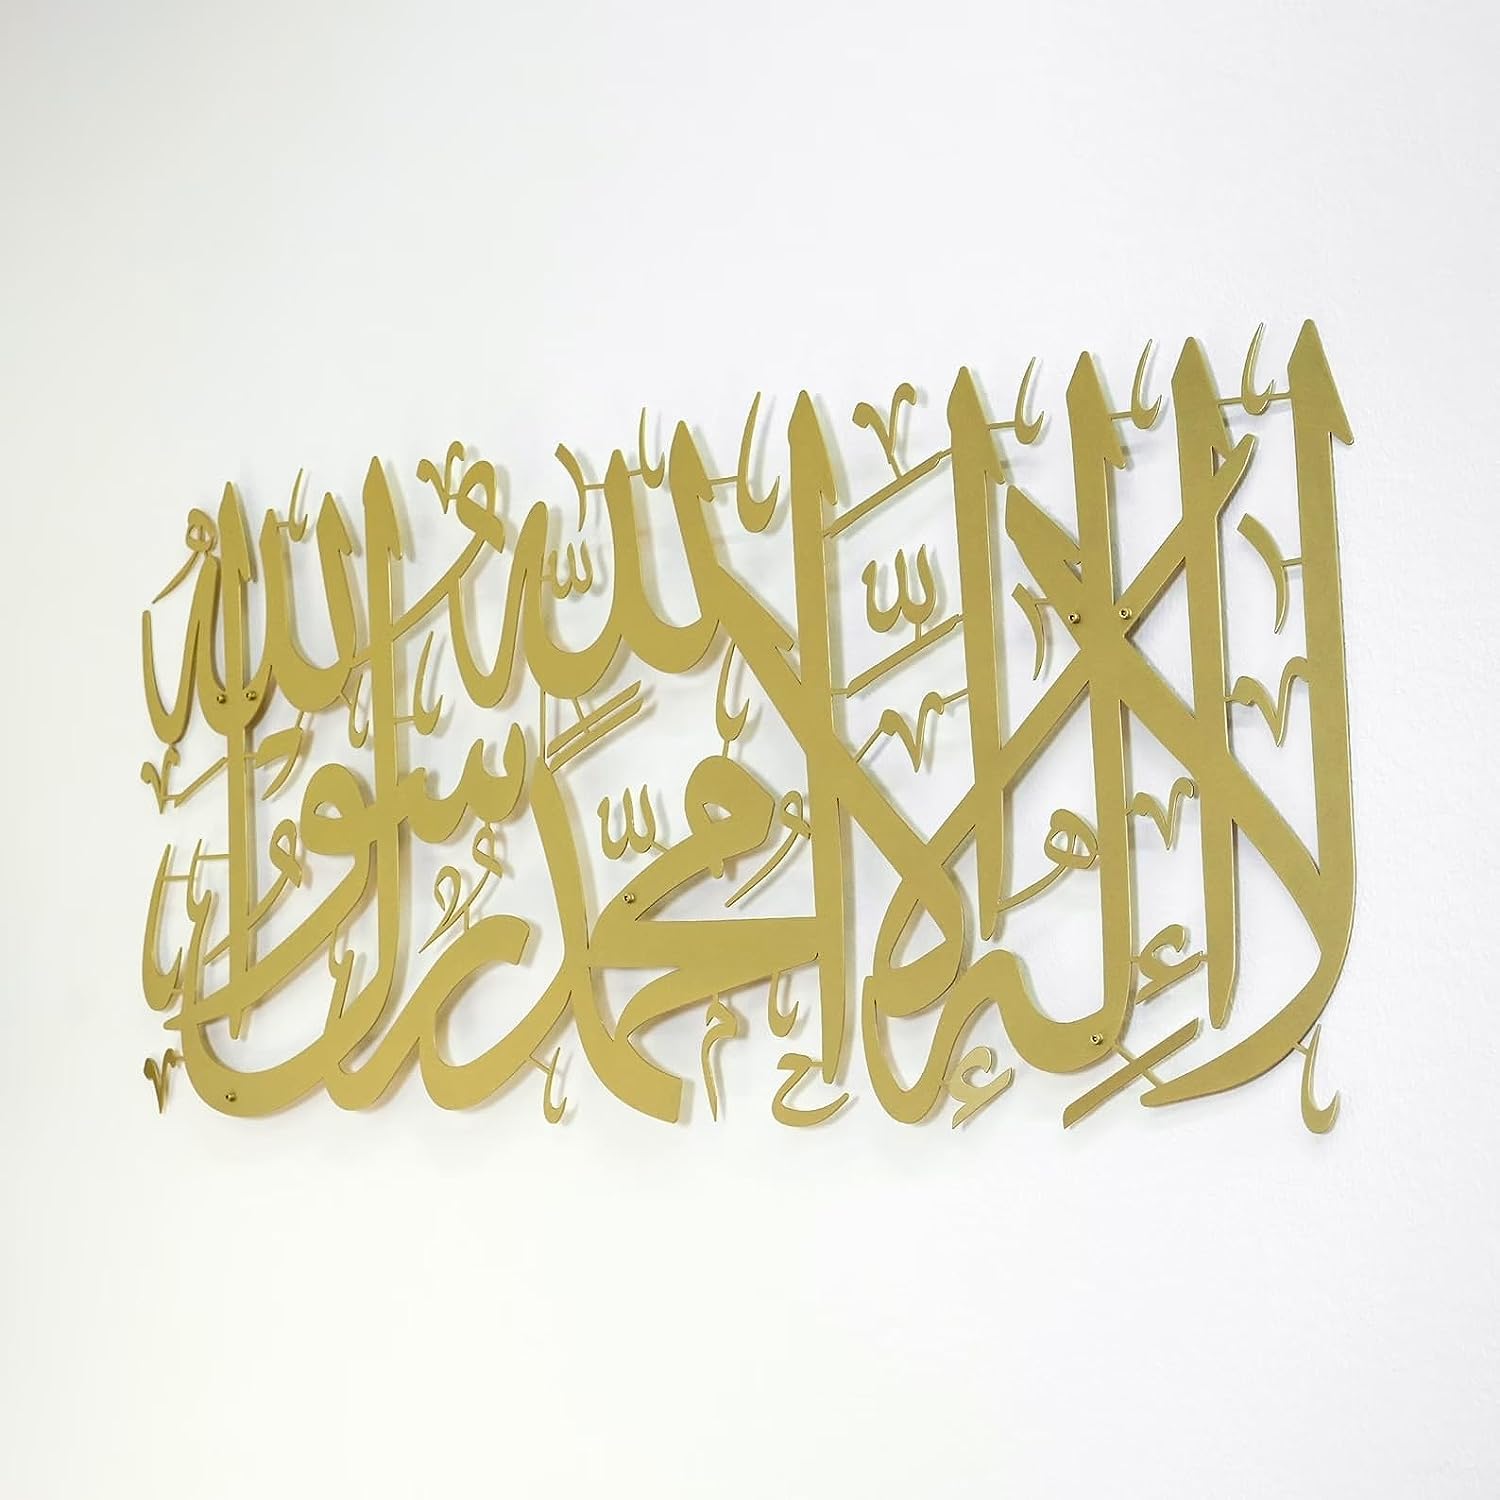 First Kalima Islamic Wall Art Tawheed Islamic Home Decor| la ilaha illallah metal wall art